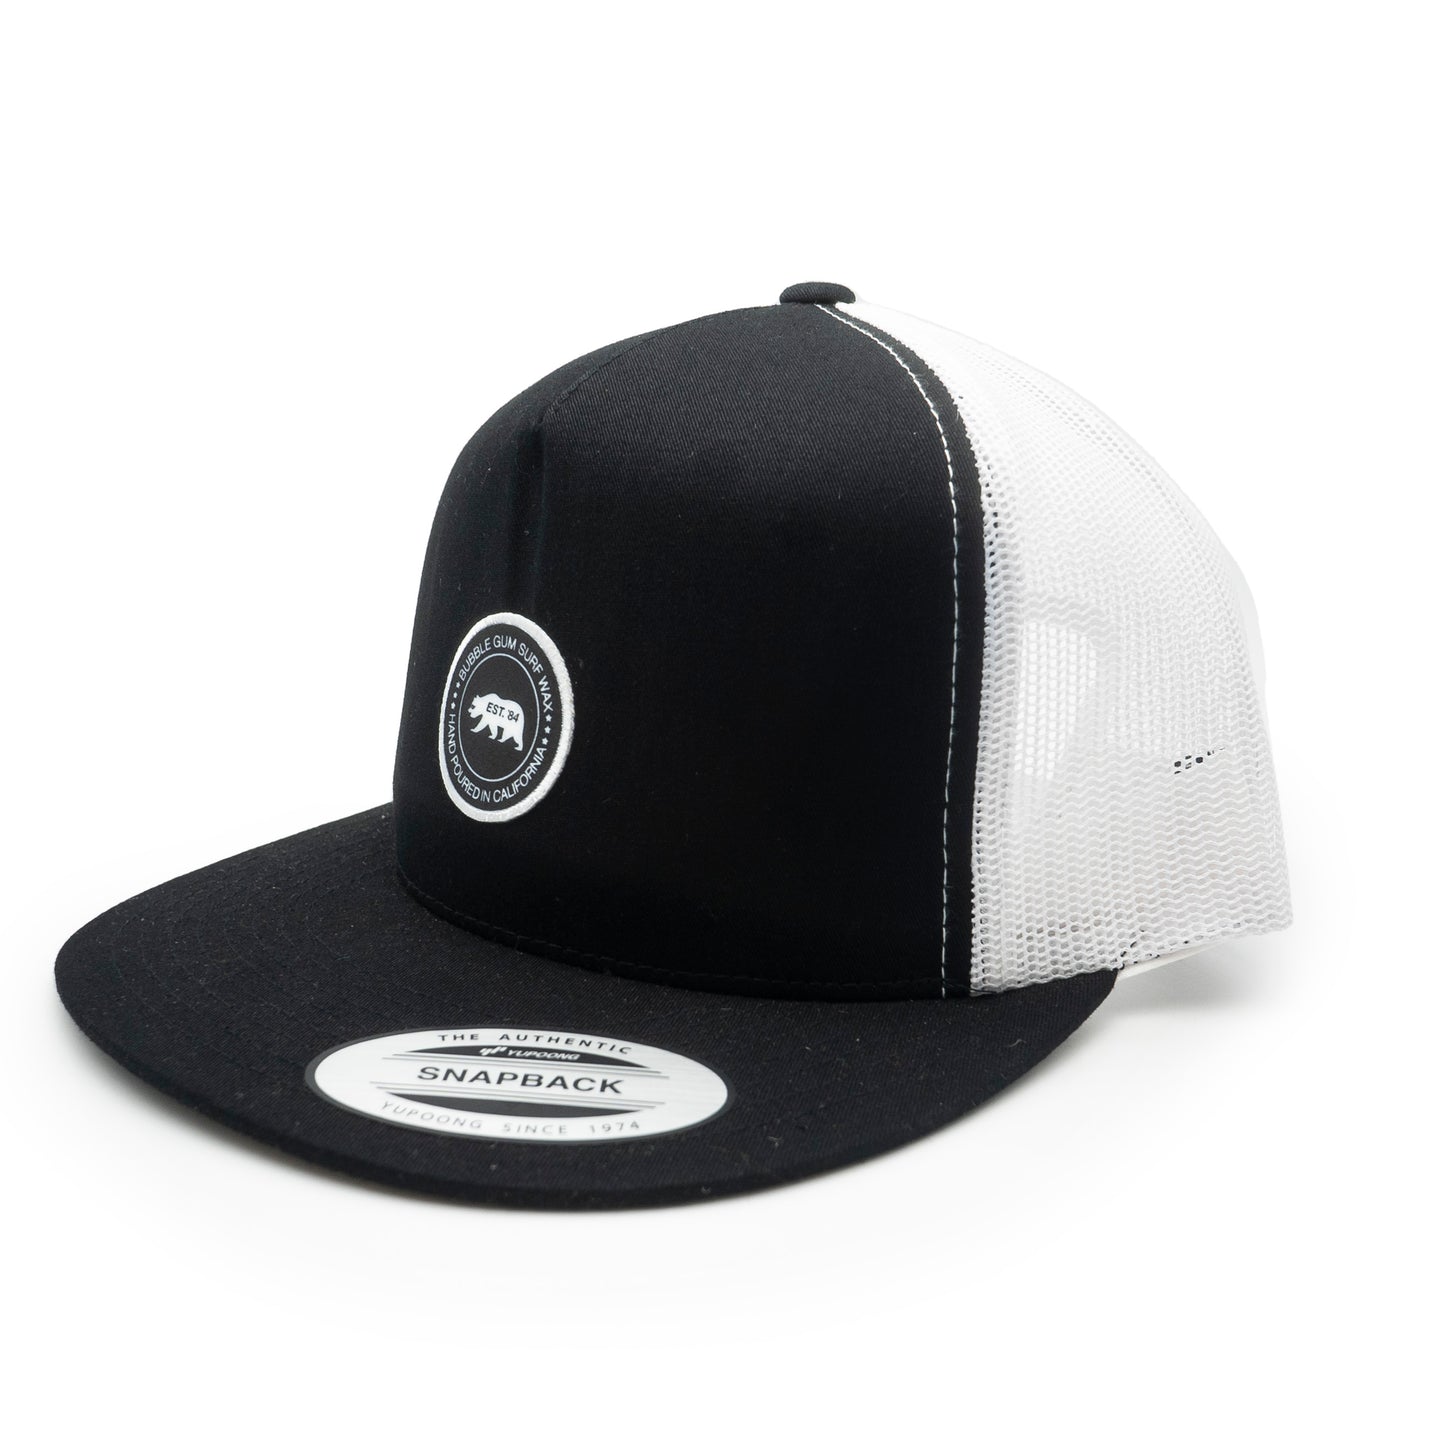 Handpoured Patch Retro Trucker Hat Black & White